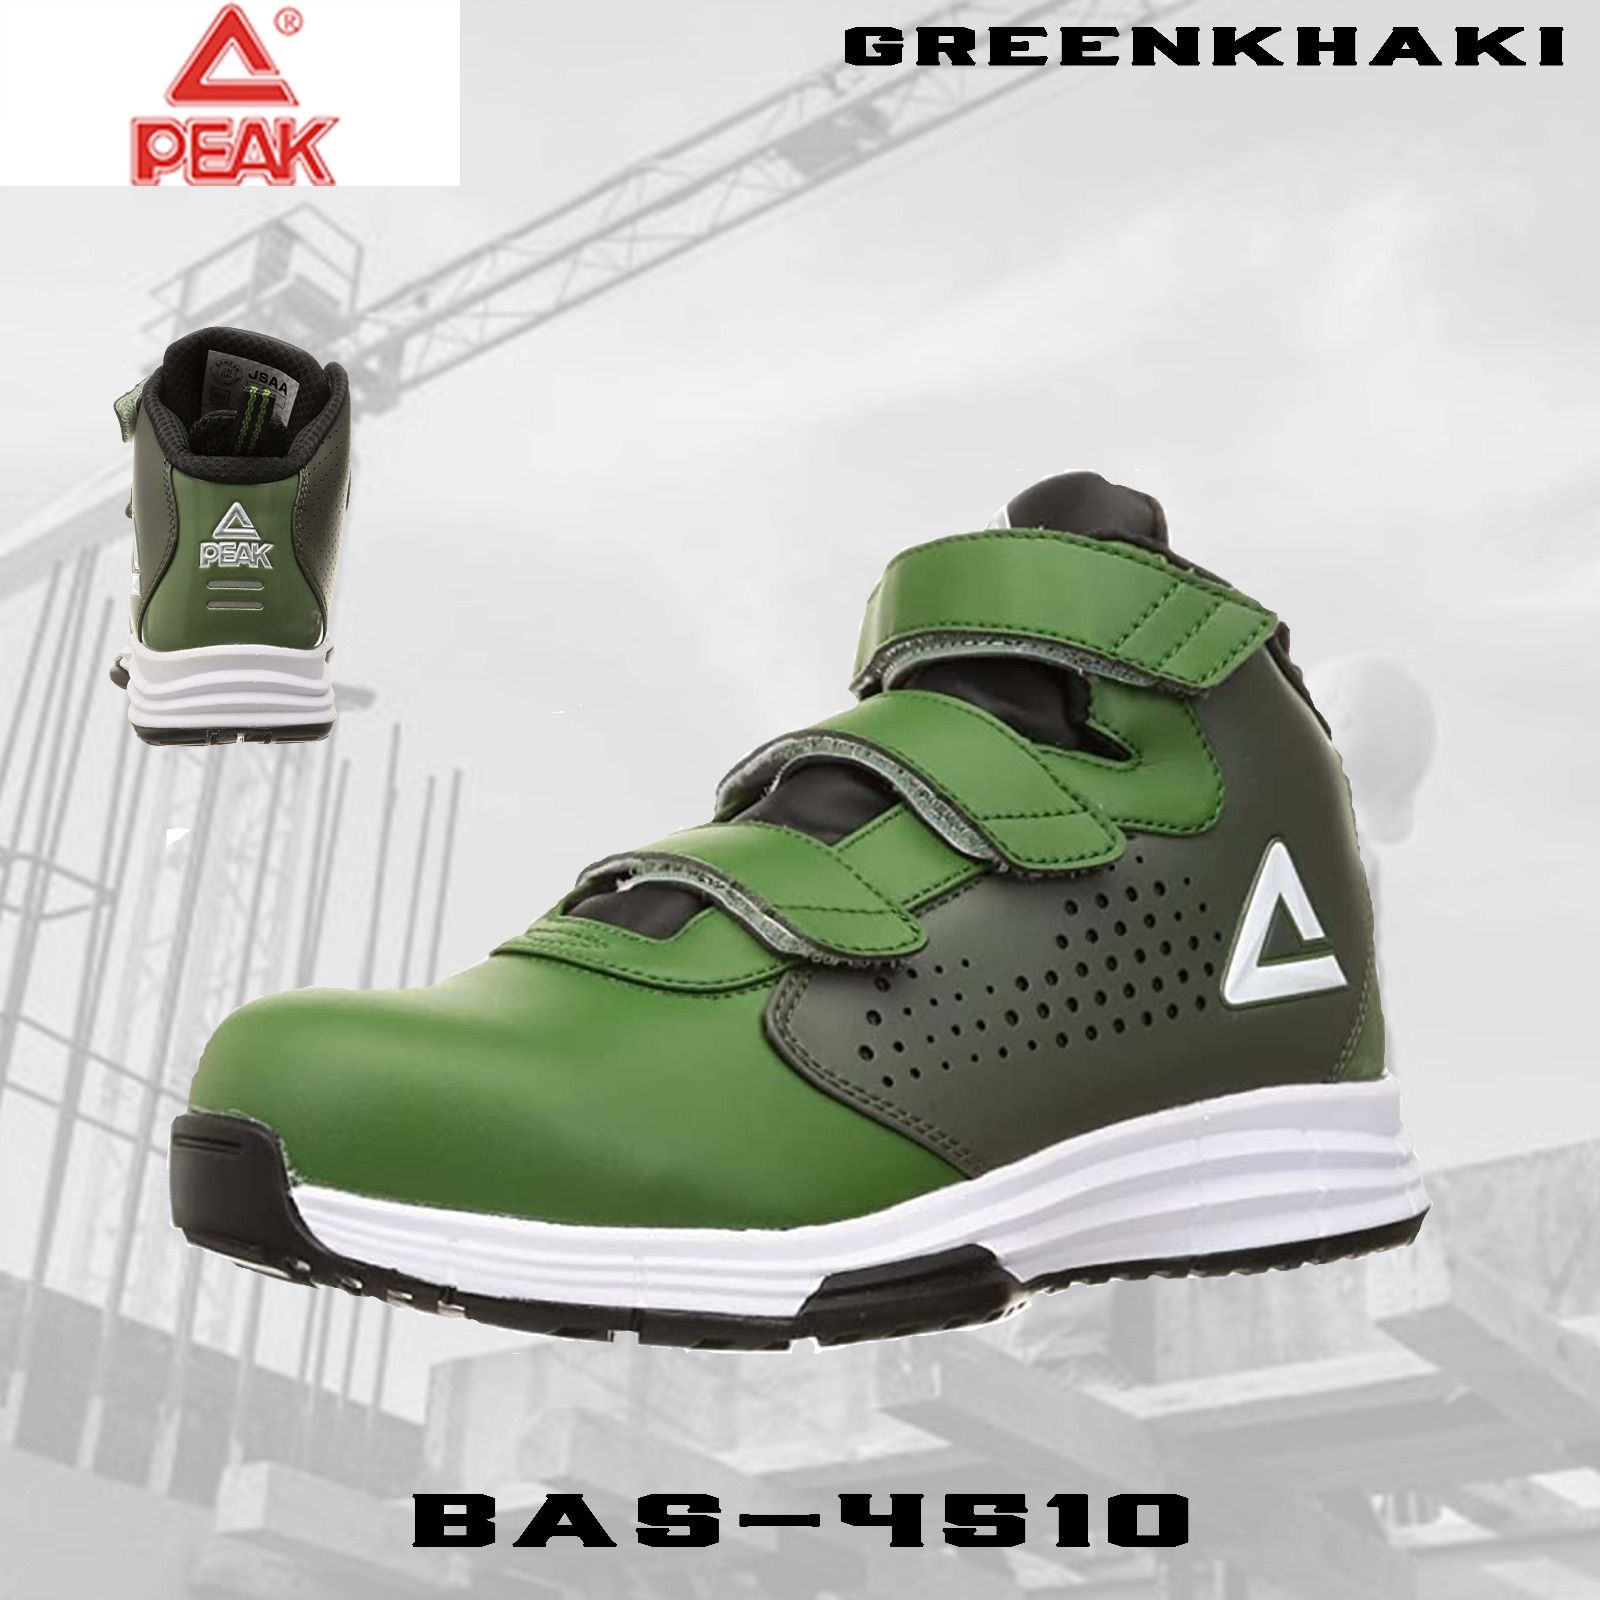 PEAK 安全靴 BAS-4510 グリーンカーキ - メルカリ